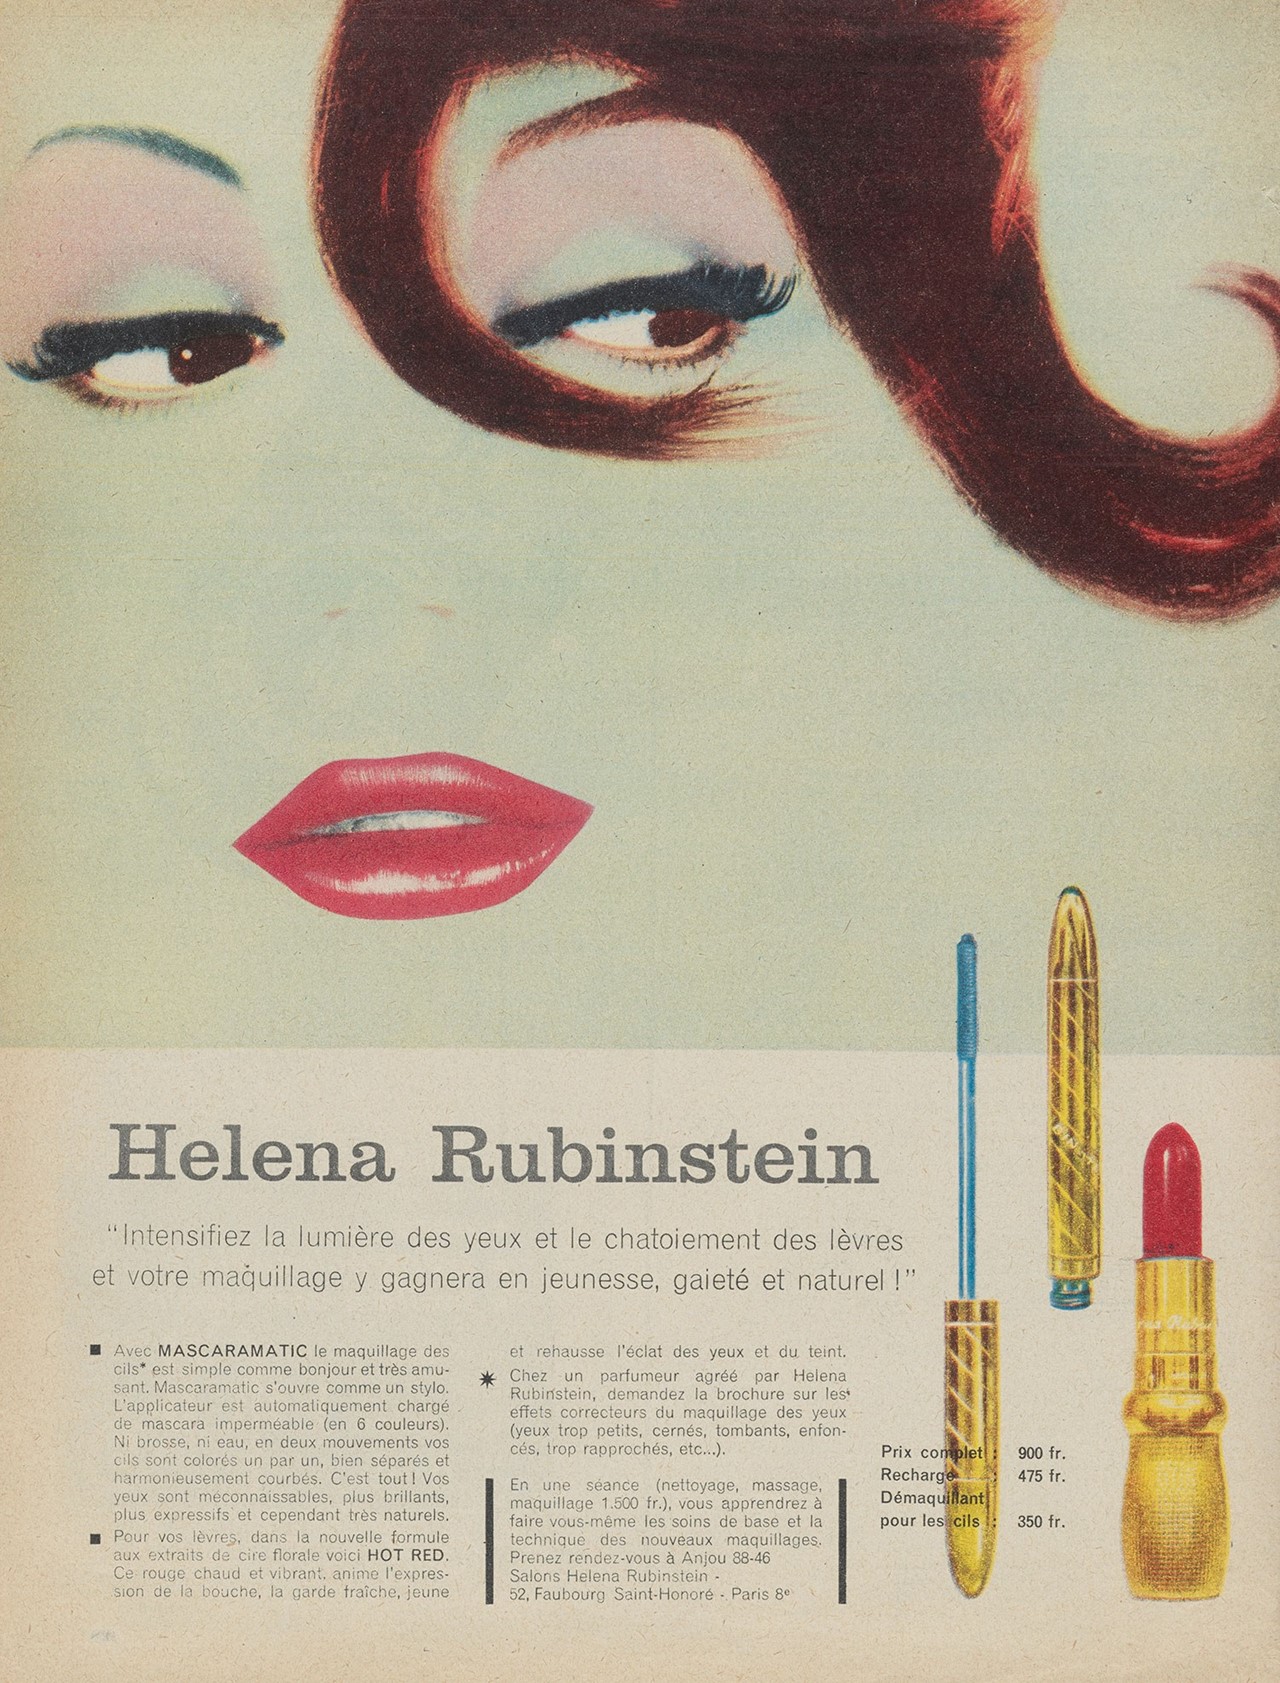 Helena Rubinstein: Self-Made Cosmetics Magnate and Multimillionaire